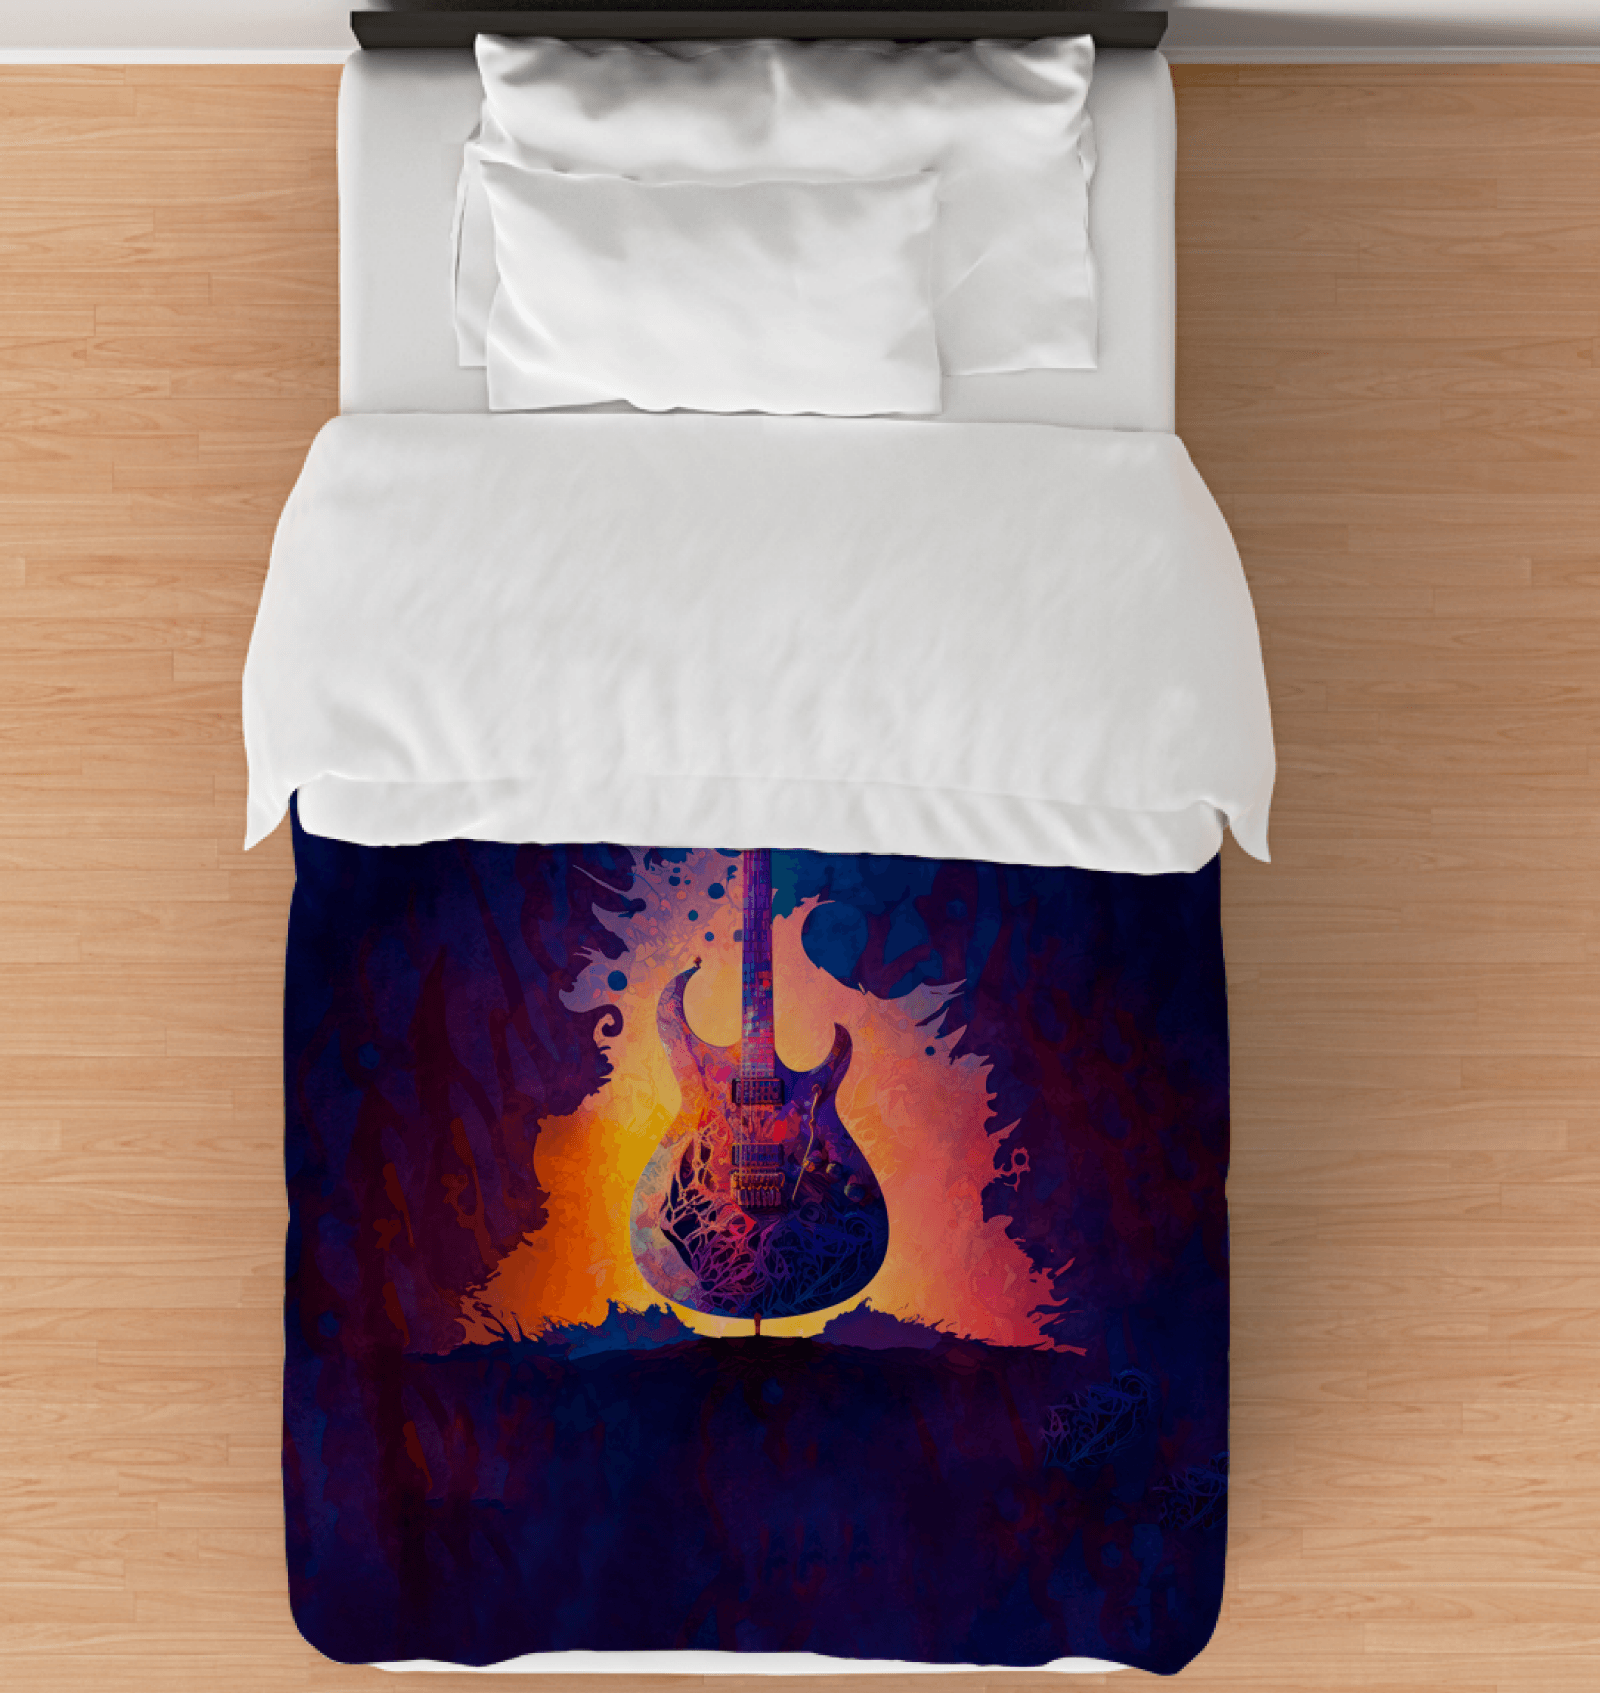 Music Muse Comforter: Inspirational Bedding - Beyond T-shirts